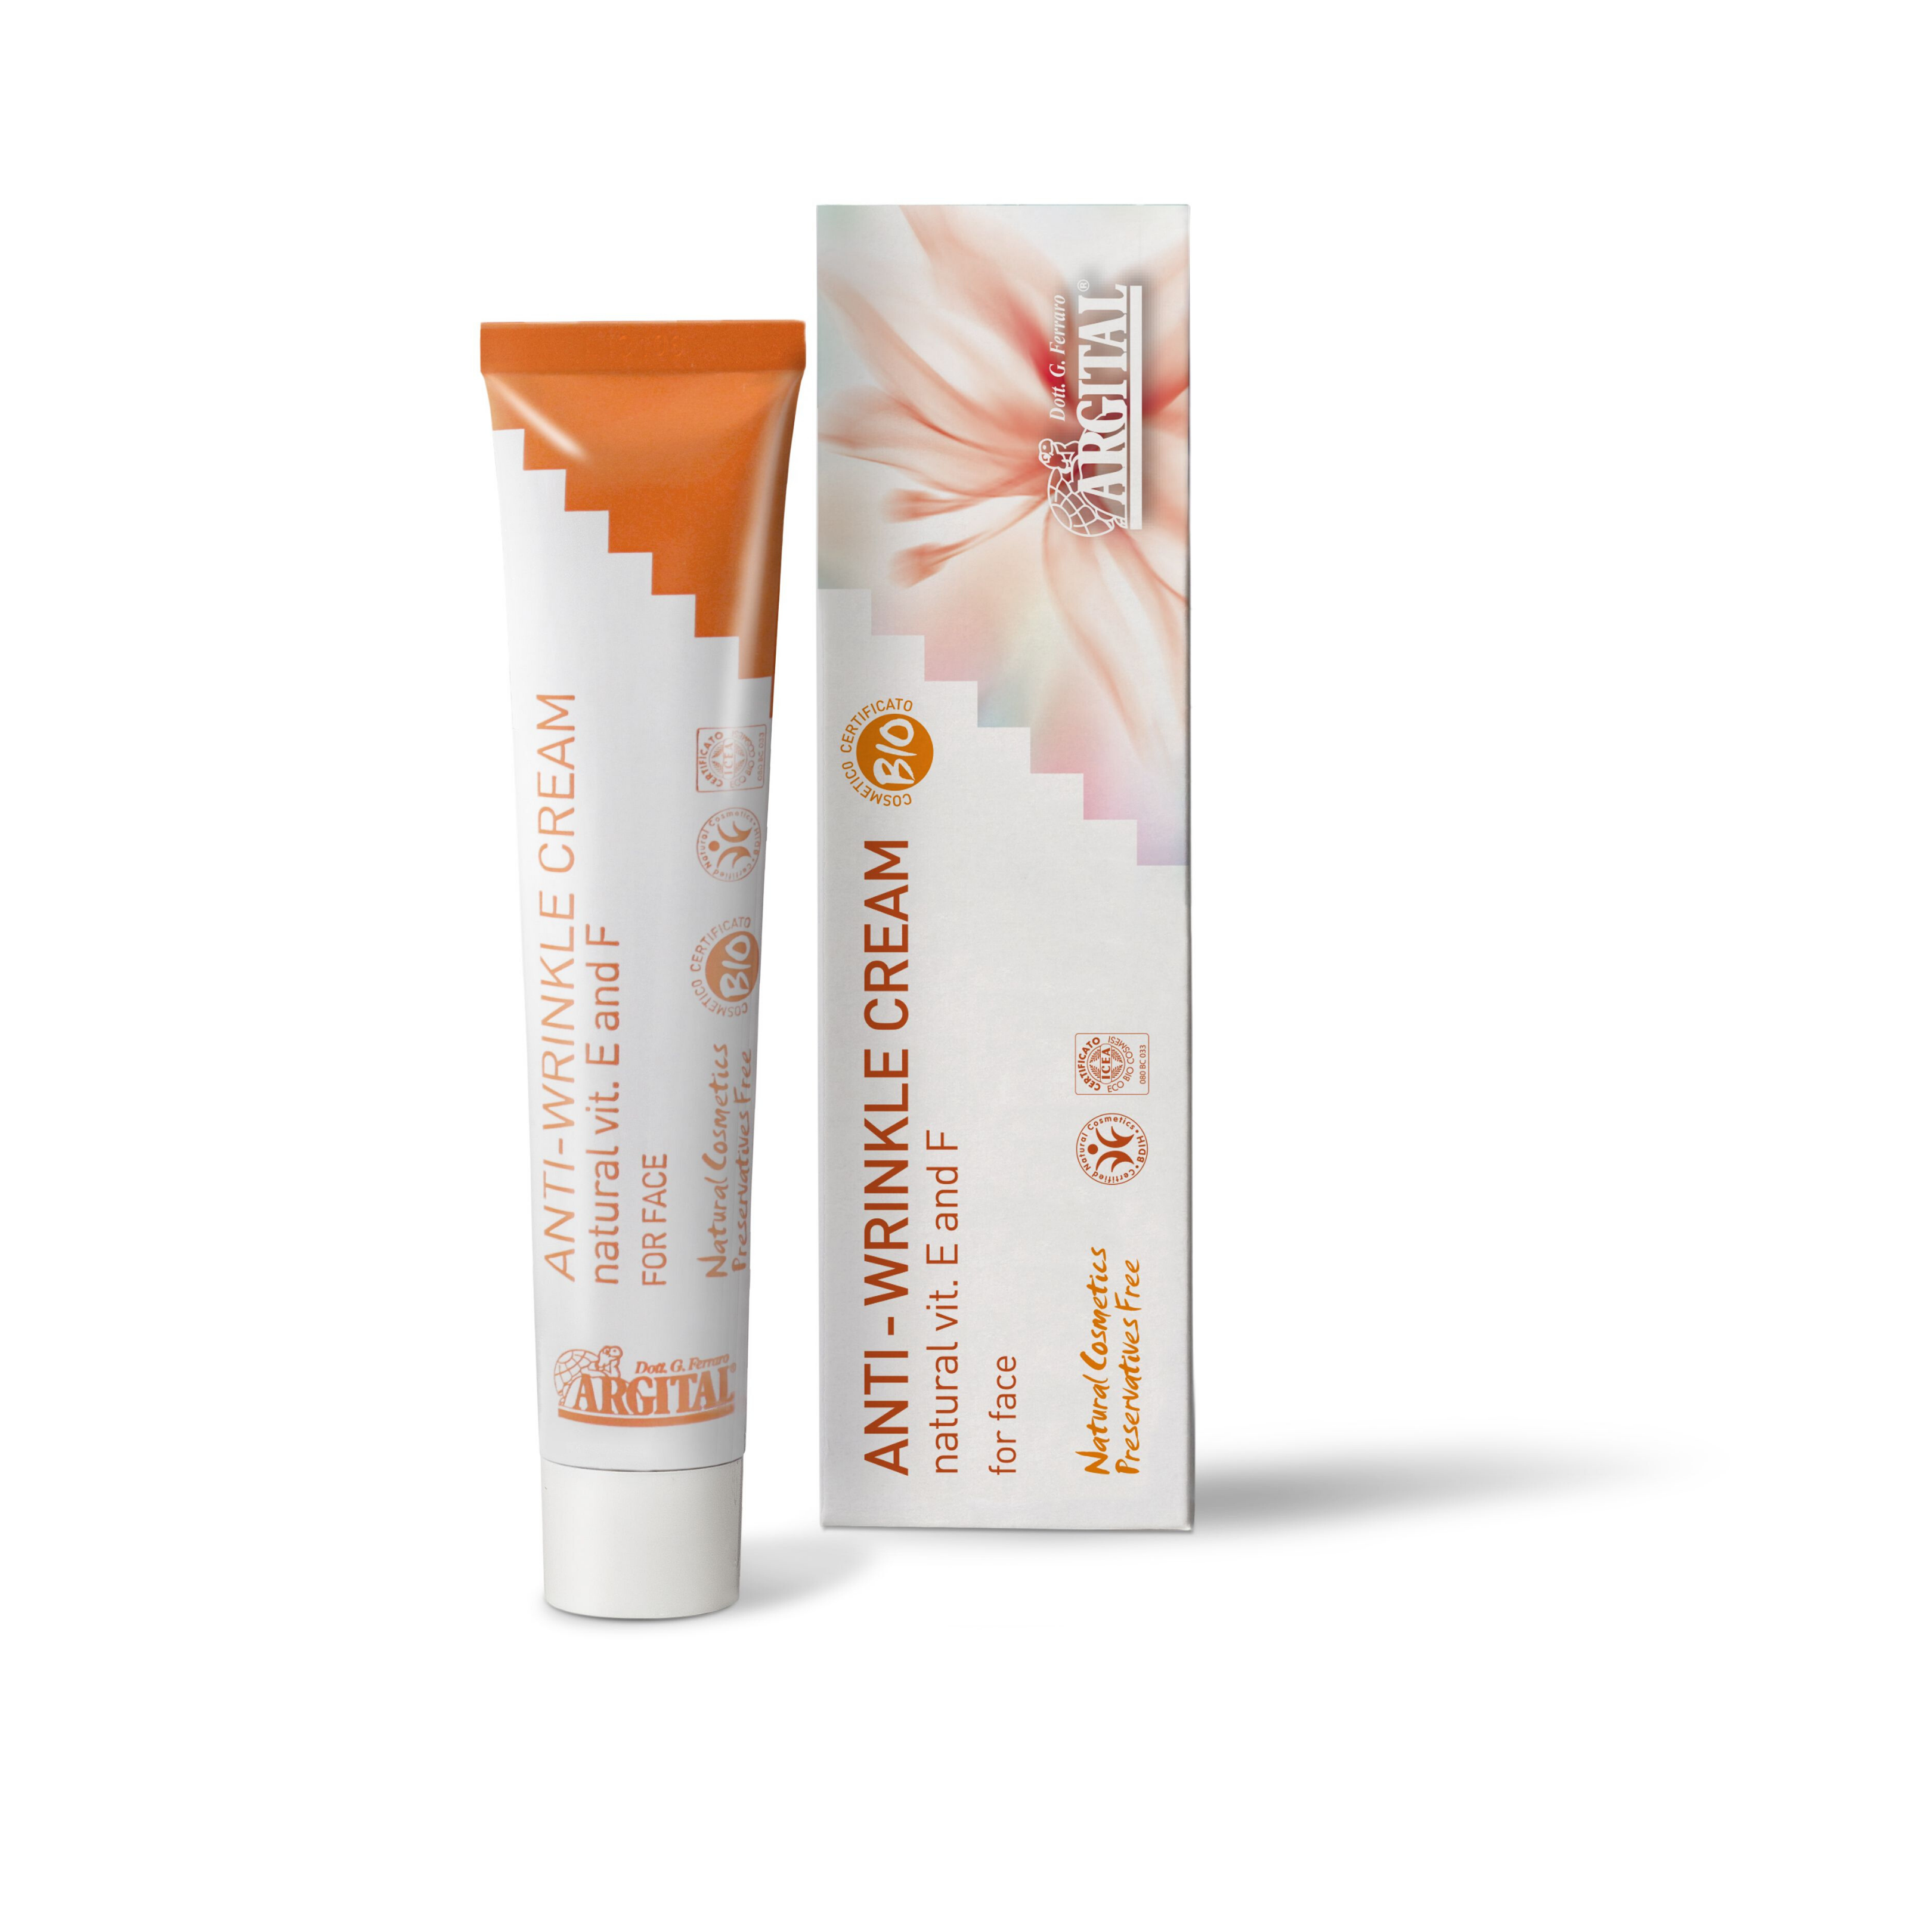 Argital Anti-Wrinkle Moisturising Cream for mature skin